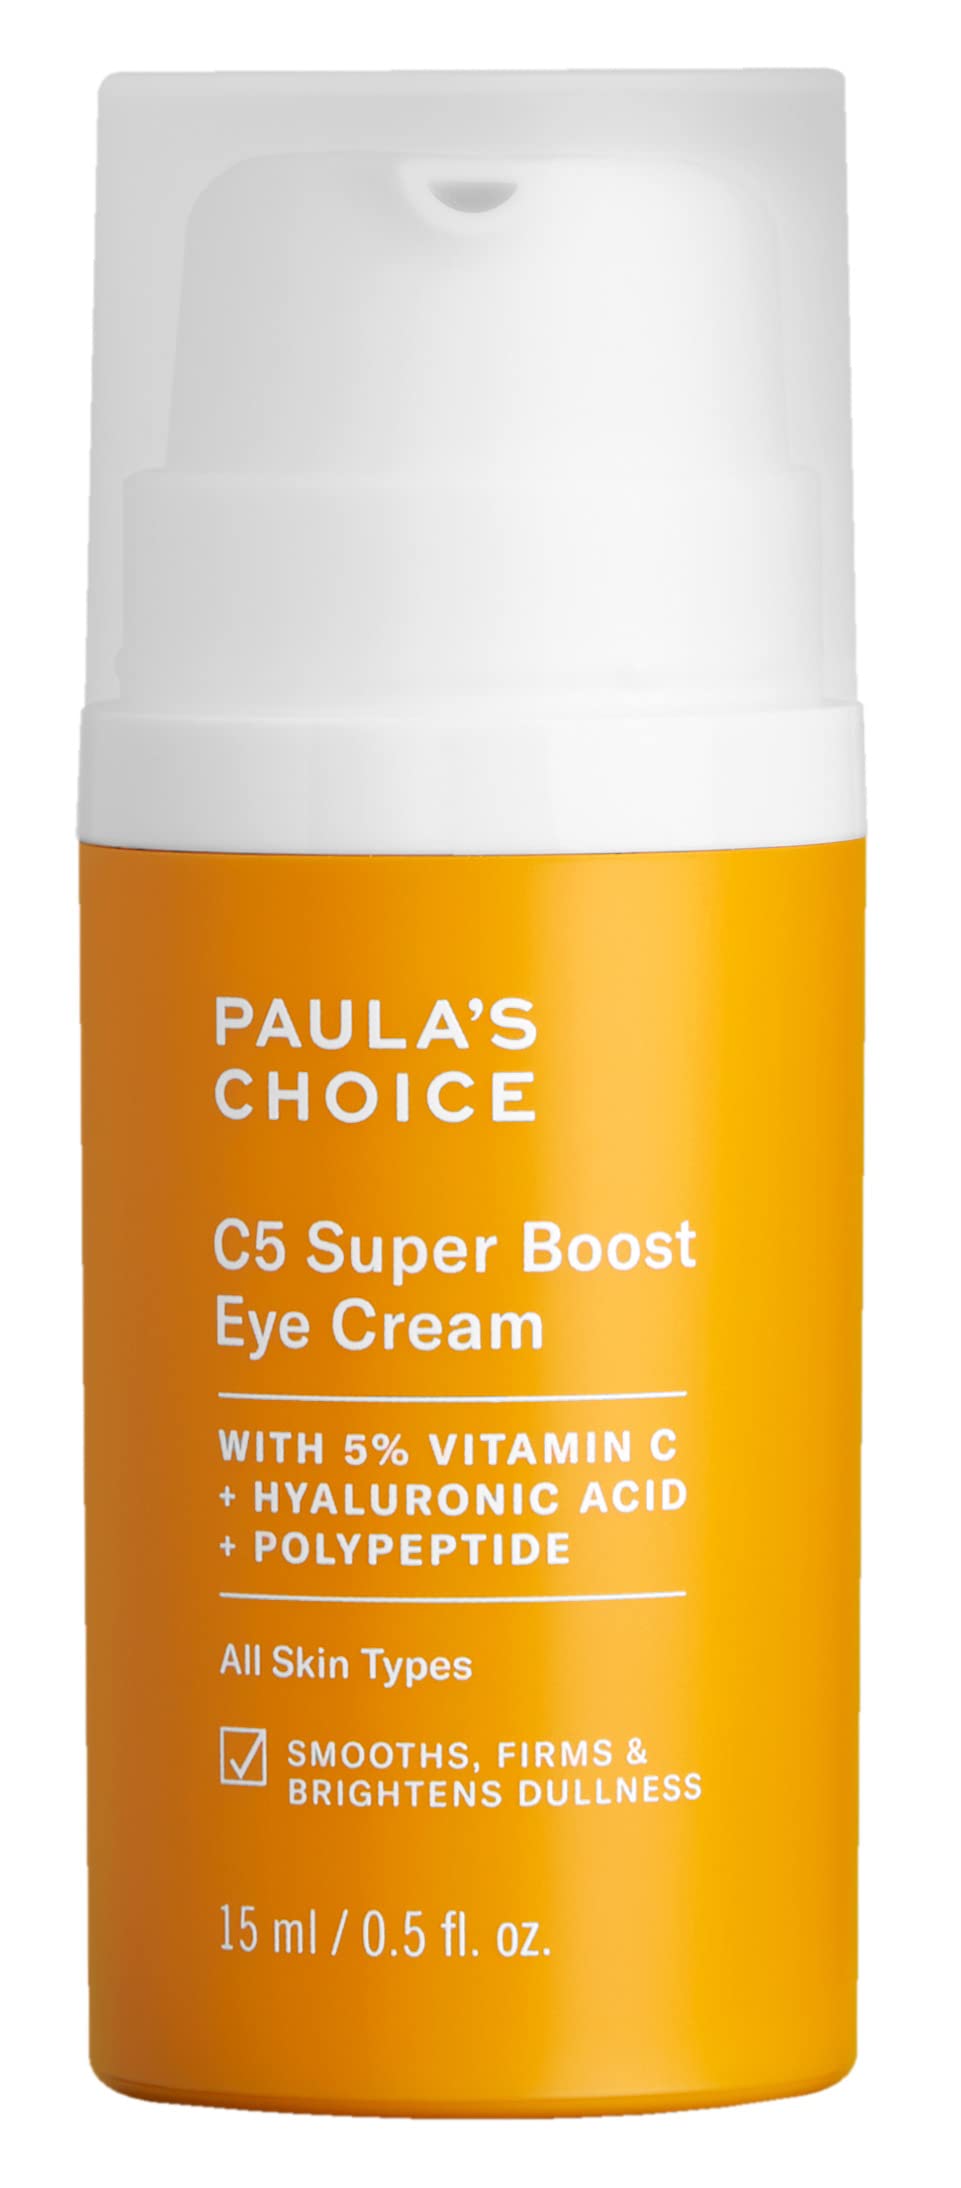 Paula's Choice C5 Super Boost Eye Cream with 5% Vitamin C, Hyaluronic Acid & Peptides, for Puffy Eyes, Dark Circles, Fine Lines & Crow’s Feet, 0.5 Fl Oz